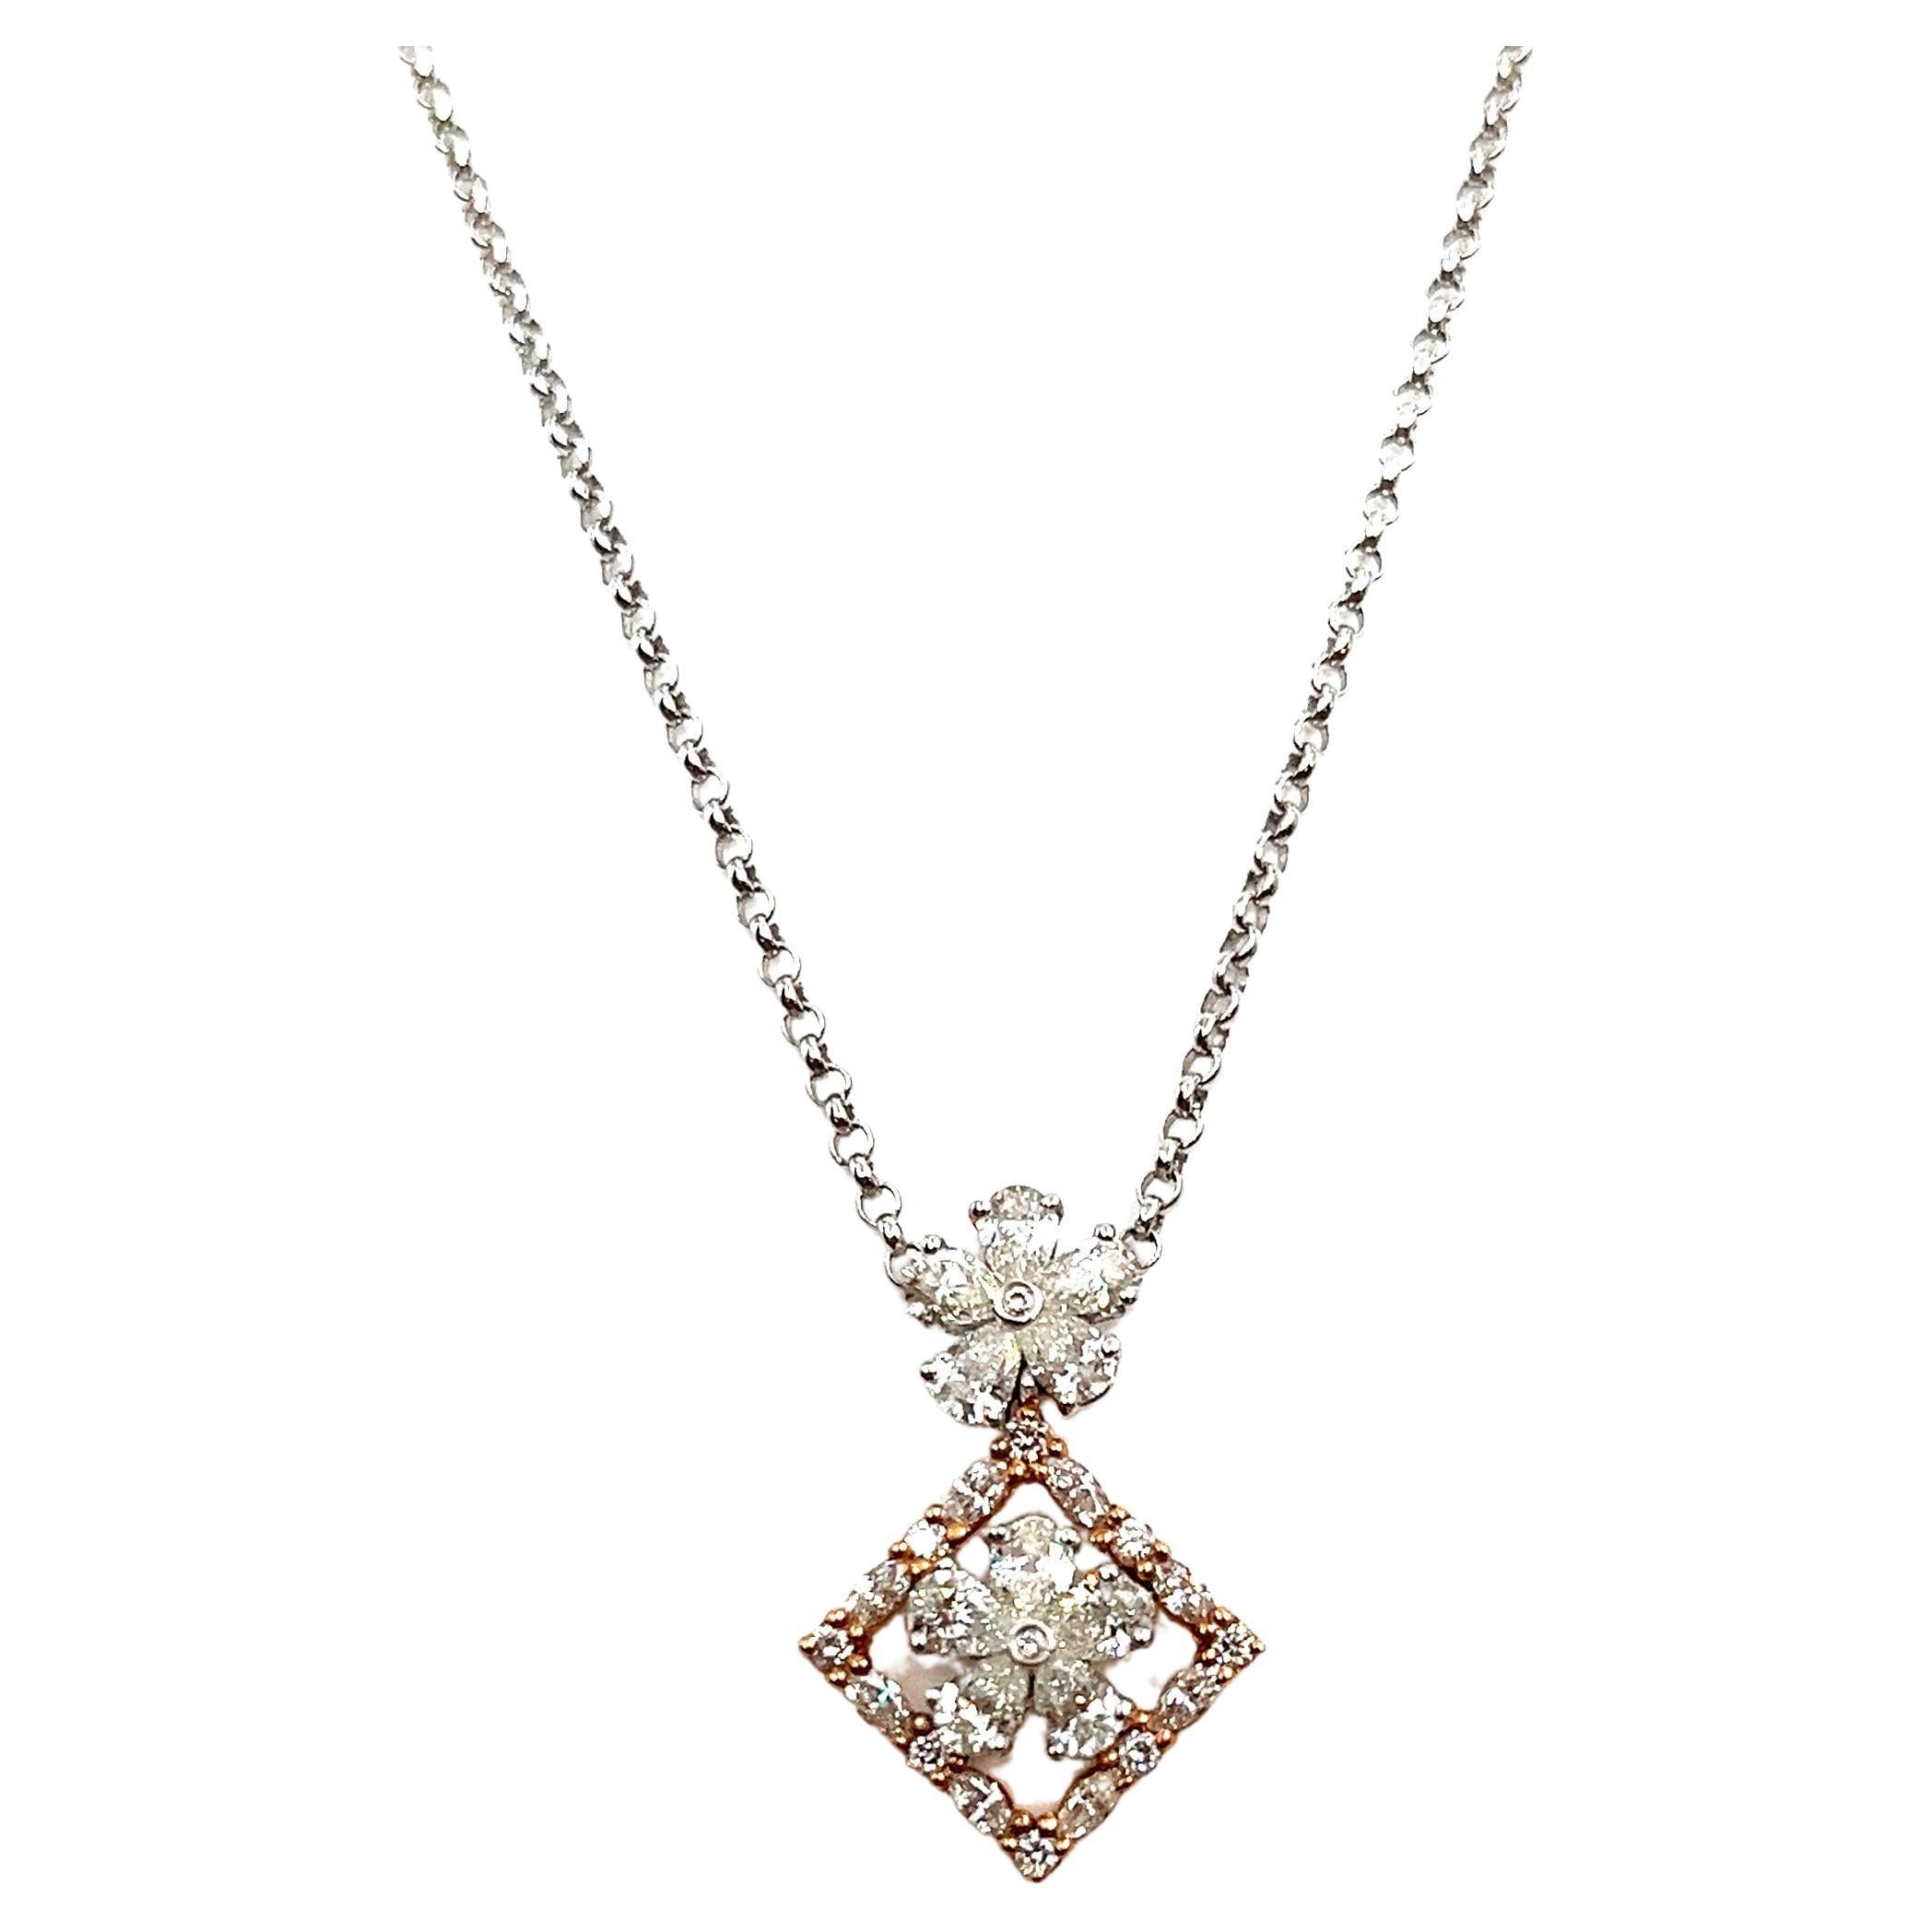 1.28 ct White & Rose Gold Diamond Pendant